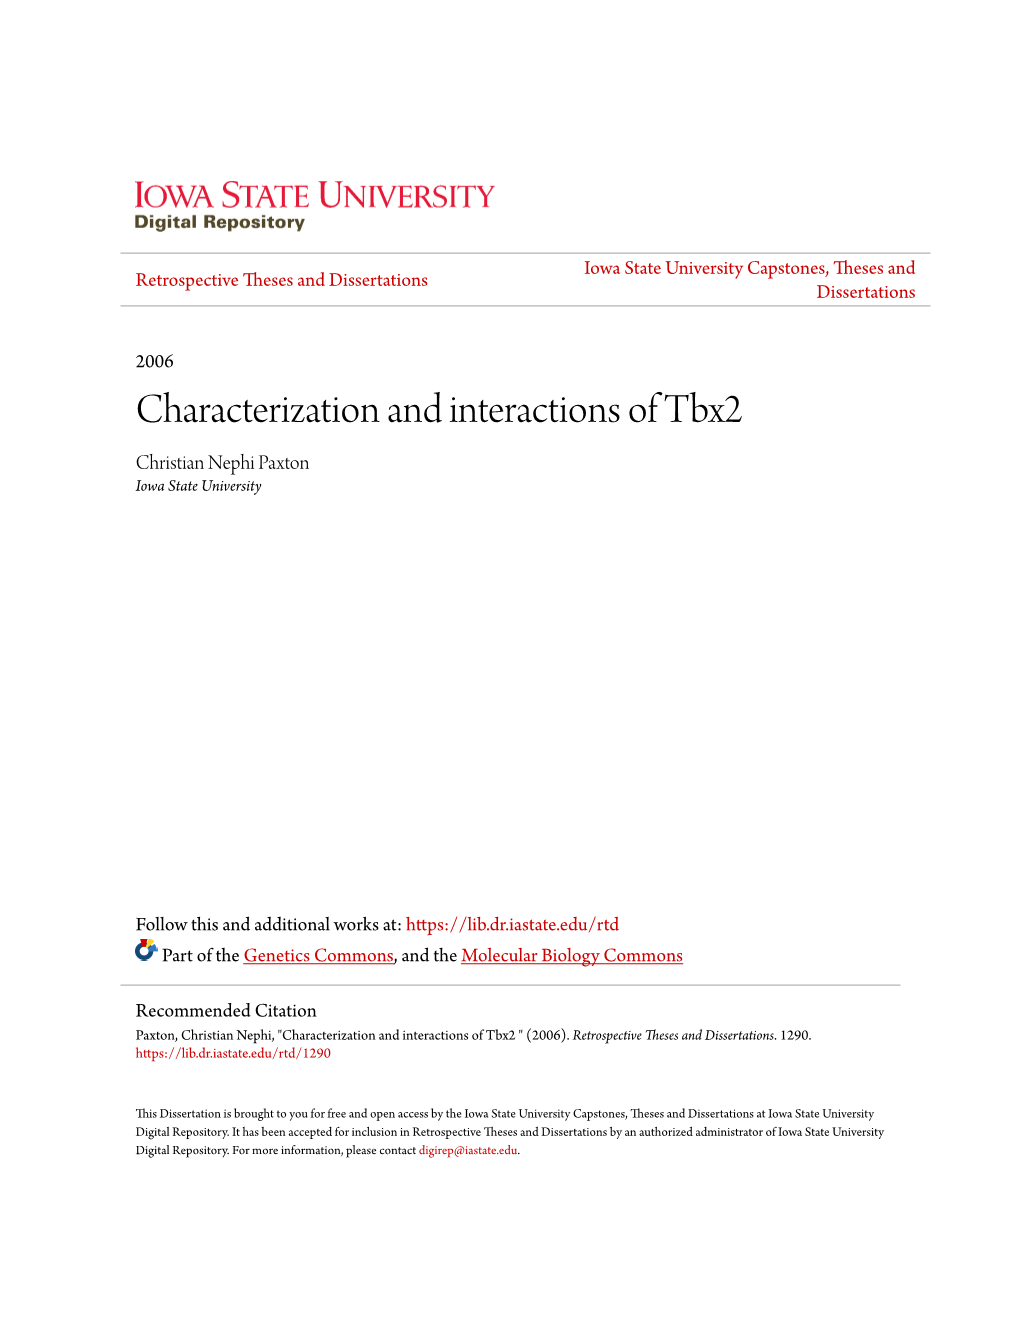 Characterization and Interactions of Tbx2 Christian Nephi Paxton Iowa State University